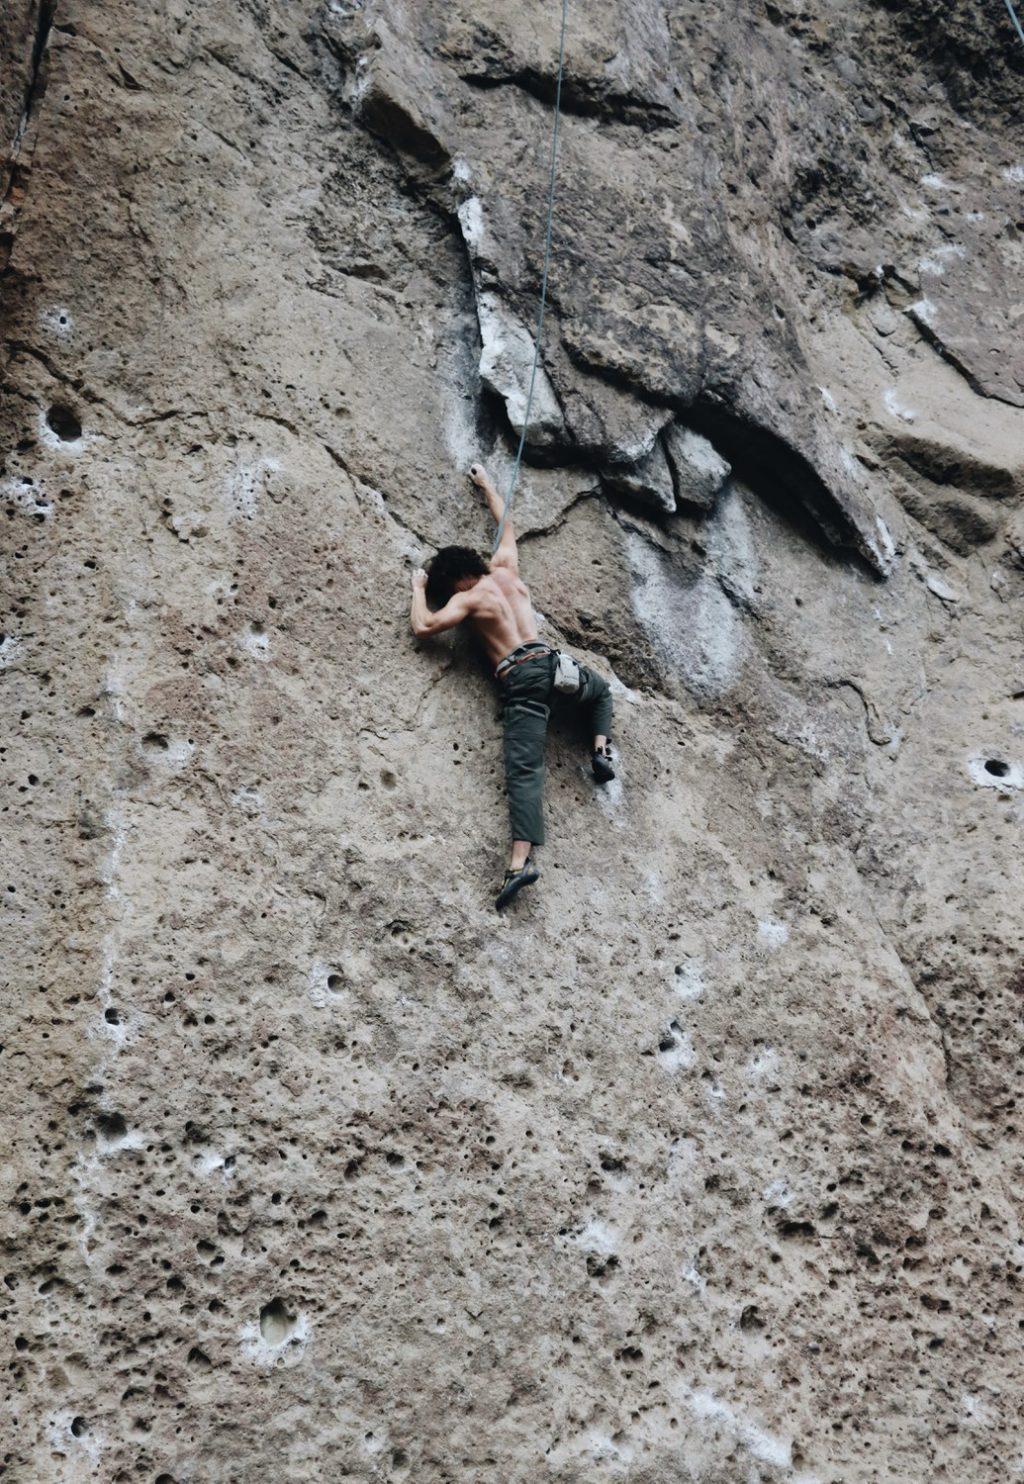 Climbing club president John Palmer climbing in Malibu Creek State Park.